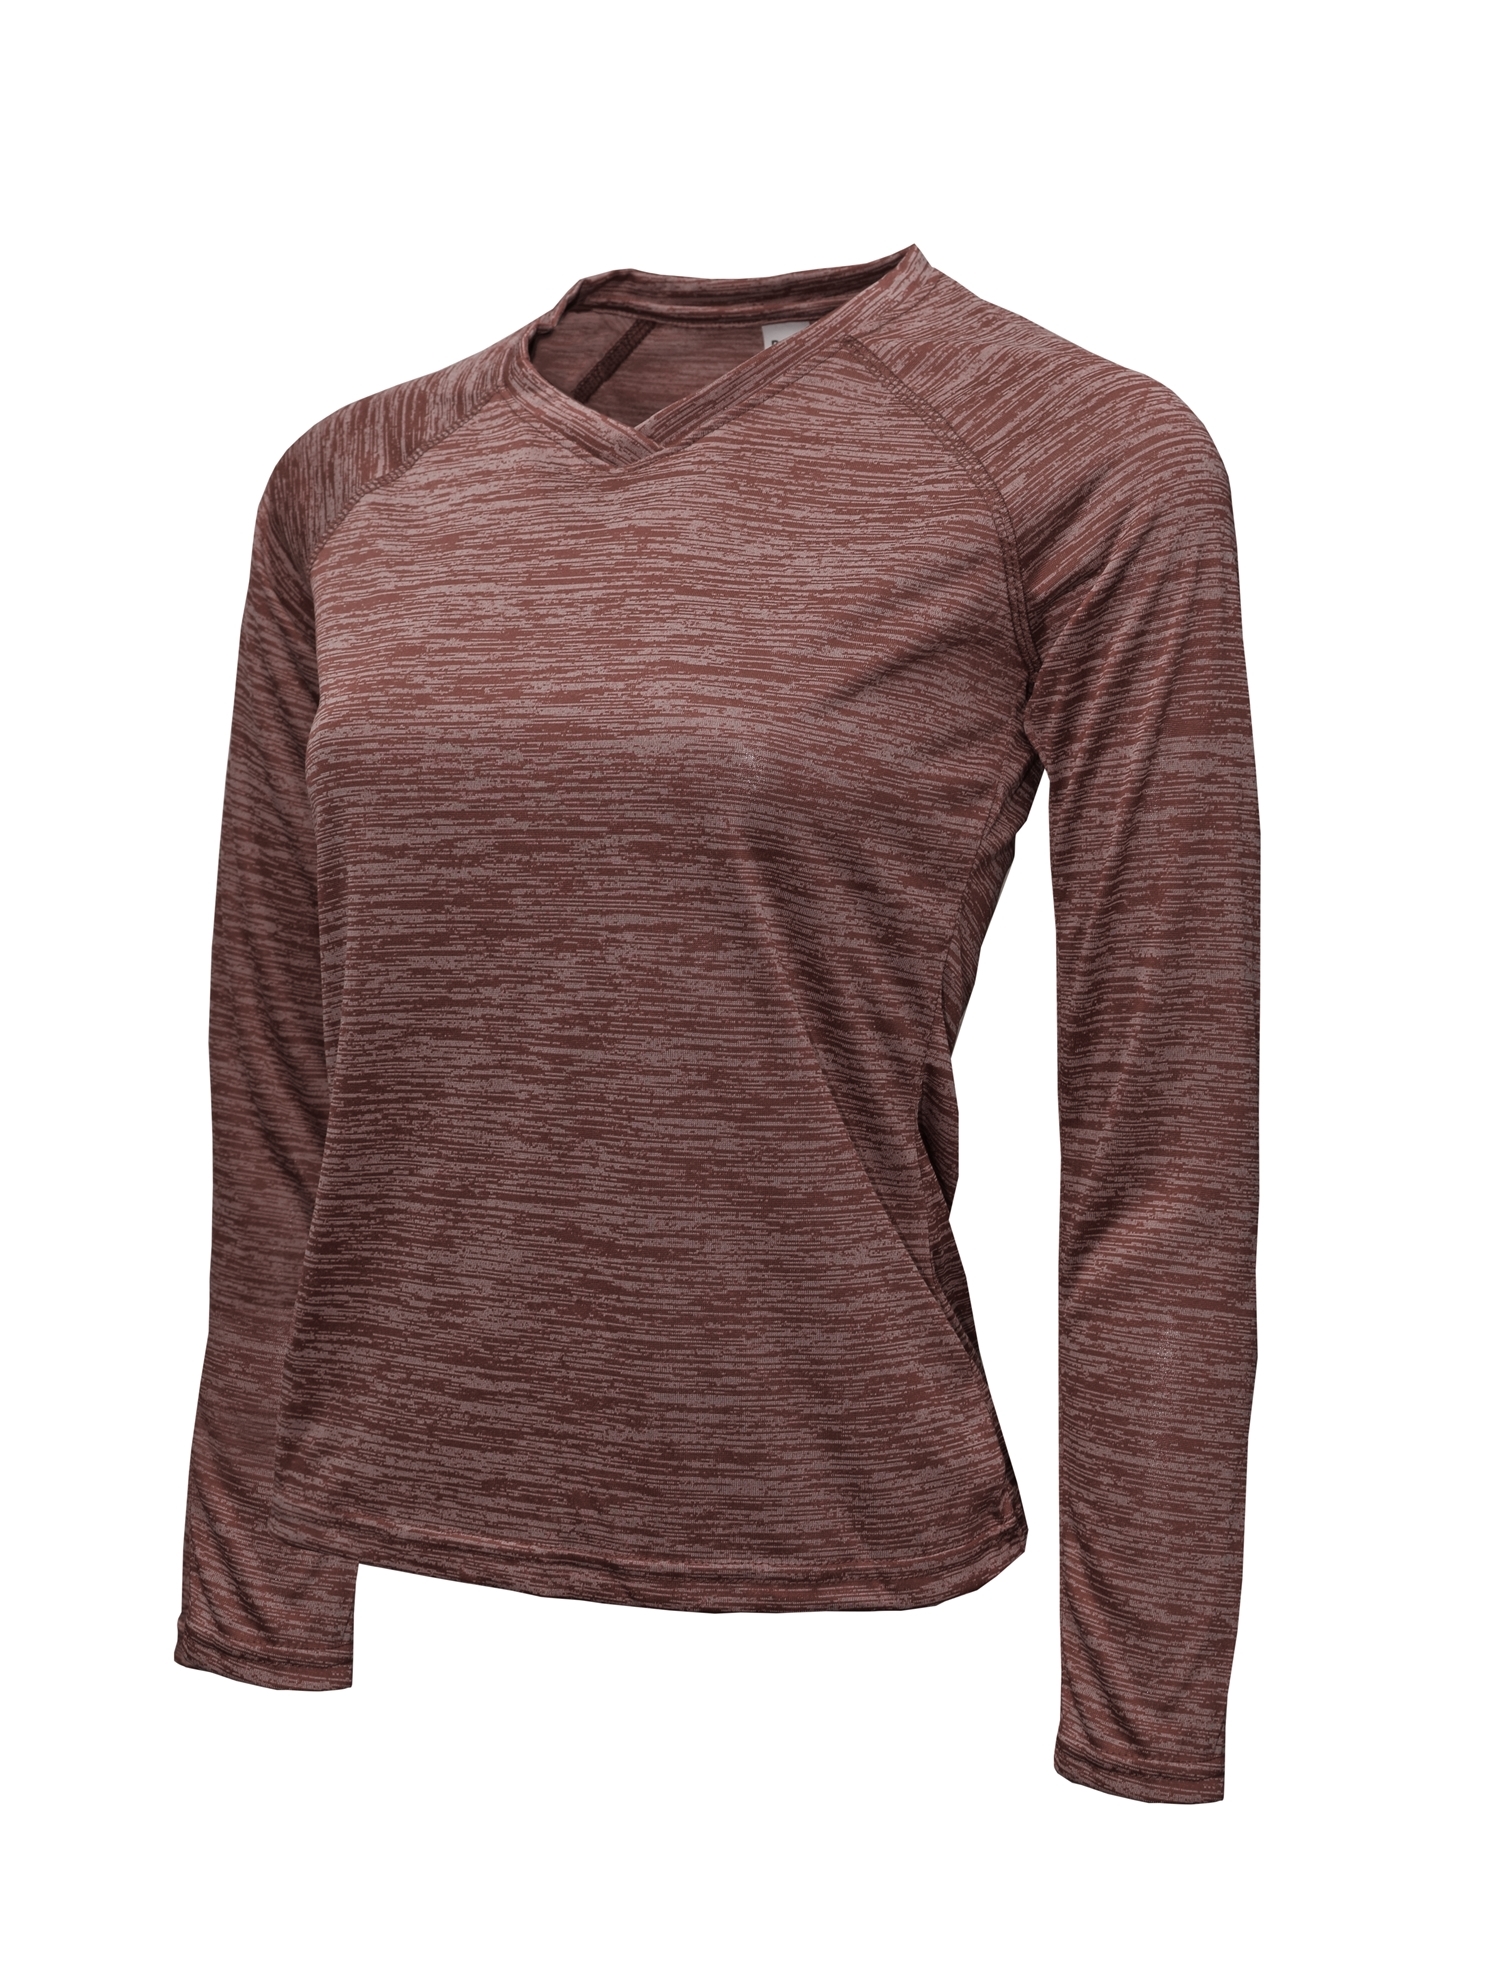 BAW Athletic Wear DT87 - Ladies Long Sleeve Dry-Tek V-Neck T-Shirt